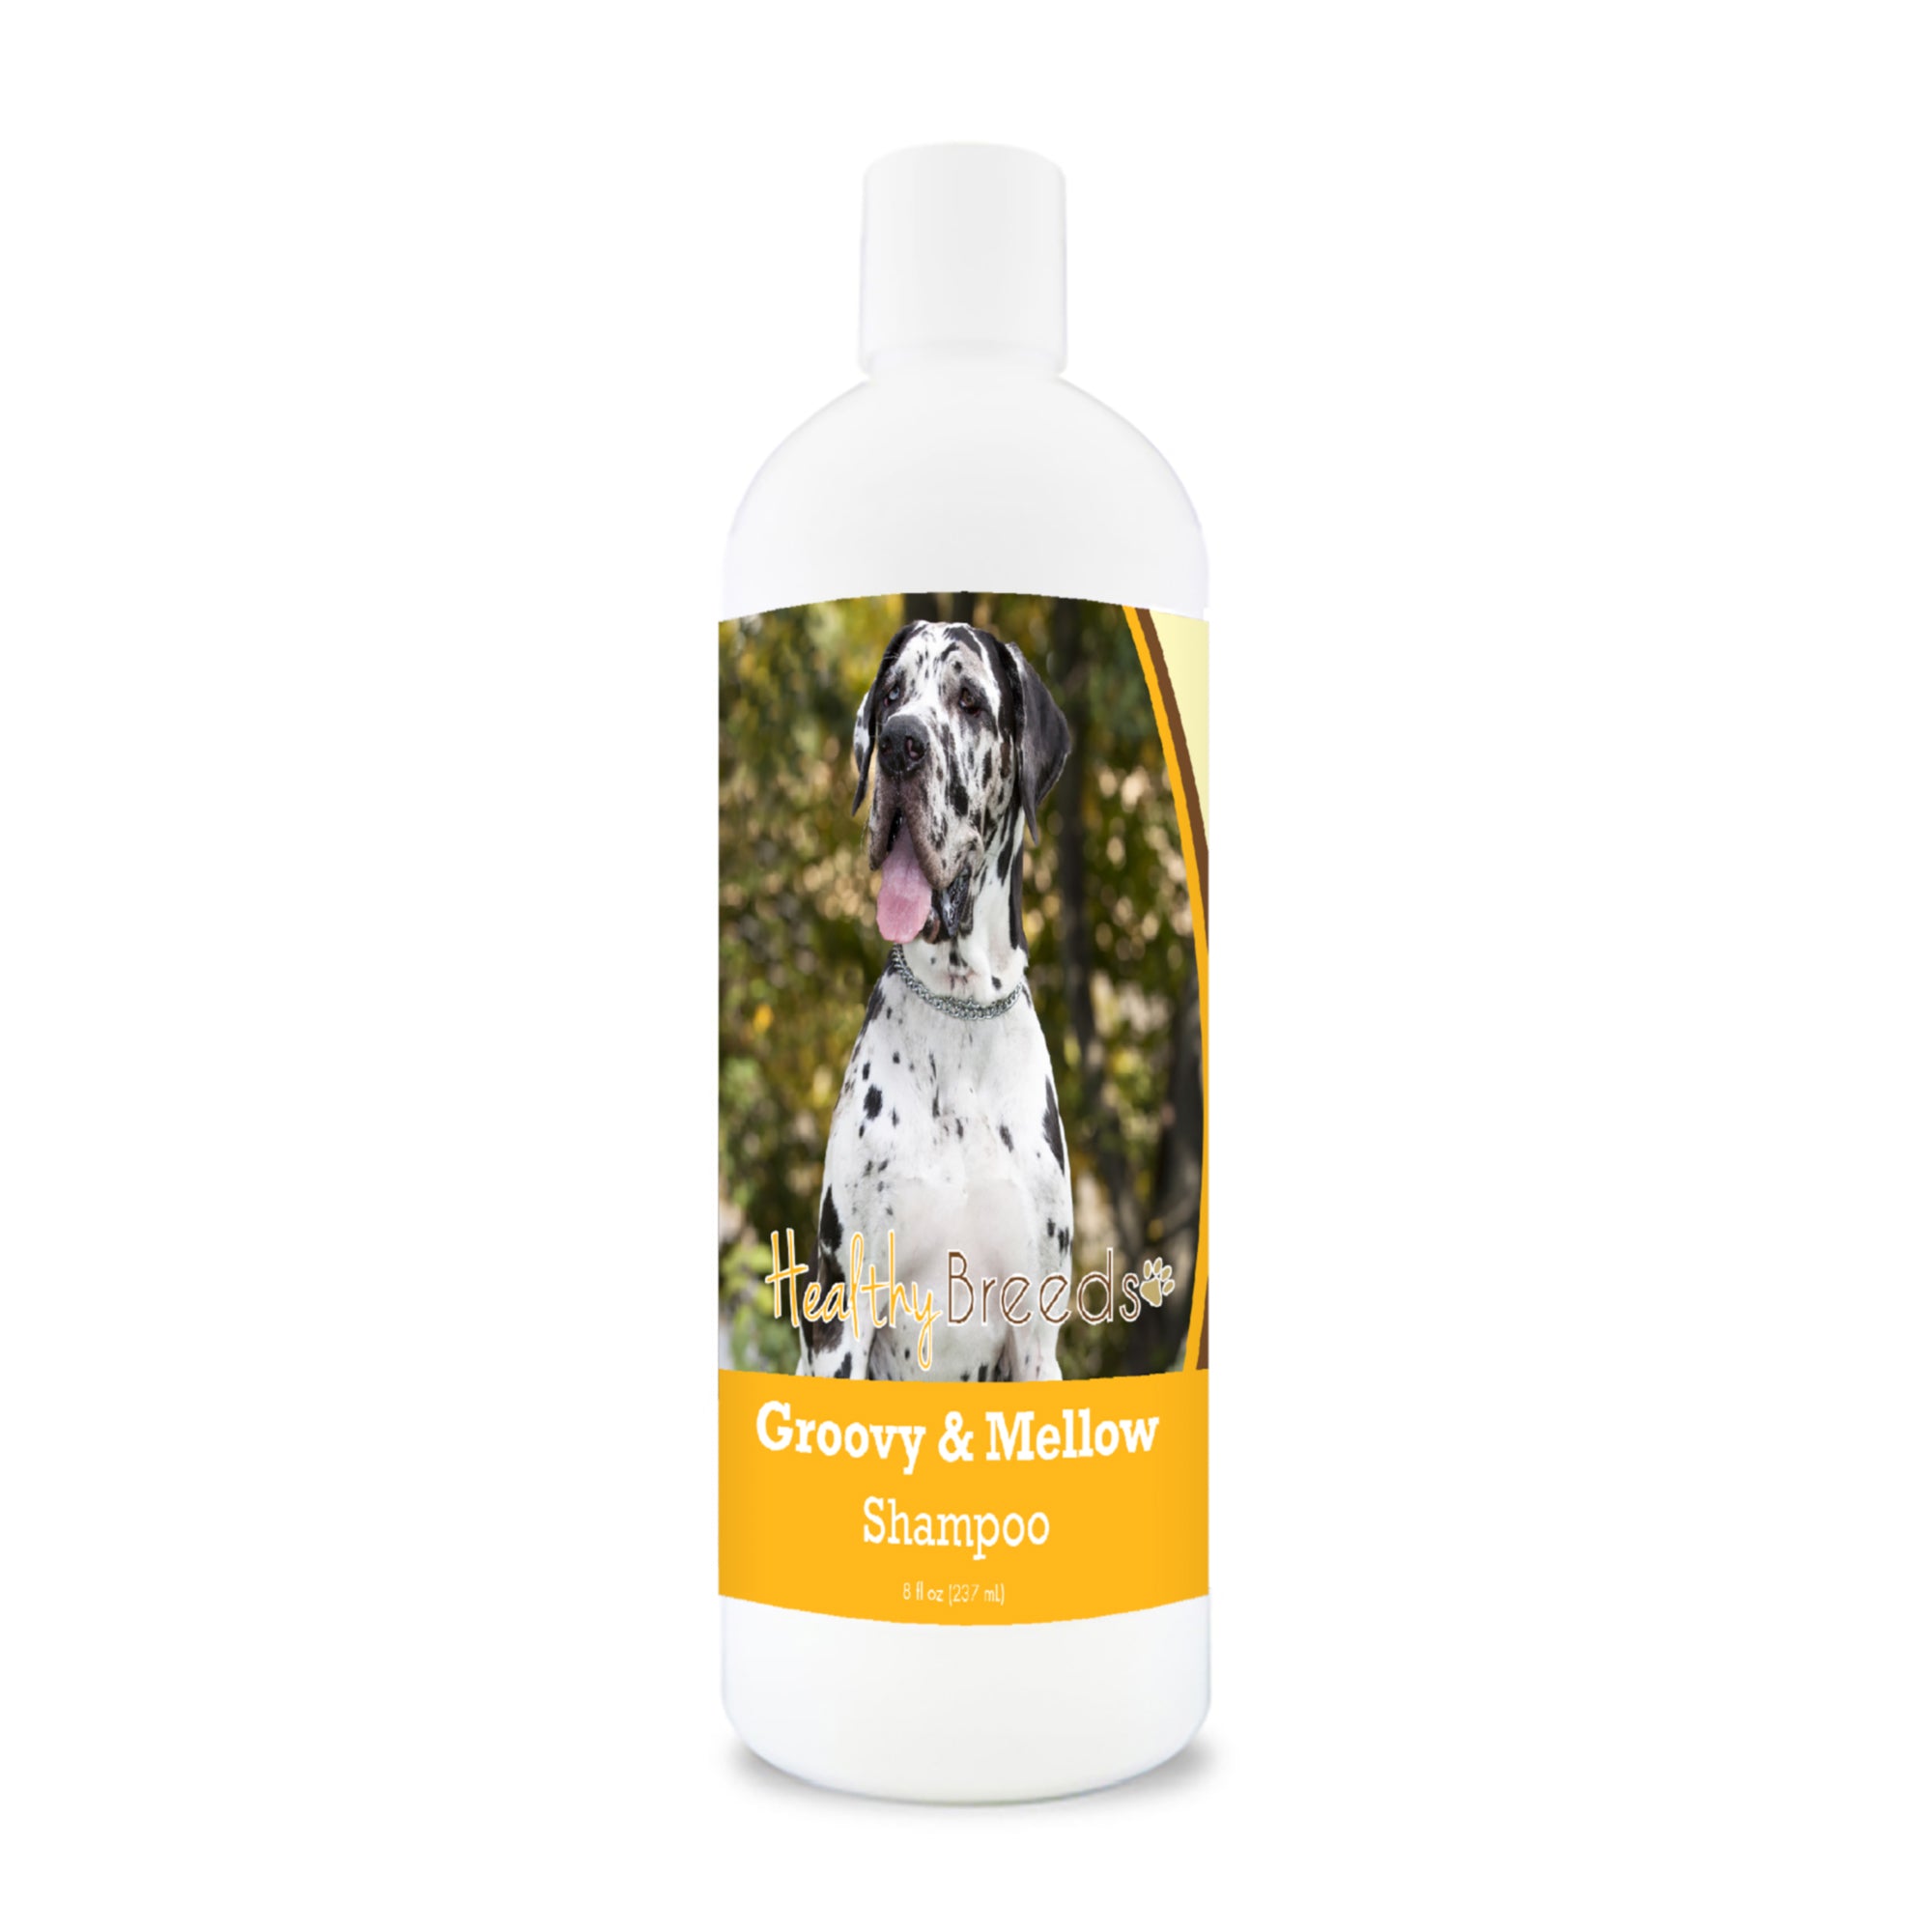 Great Dane Groovy & Mellow Shampoo 8 oz